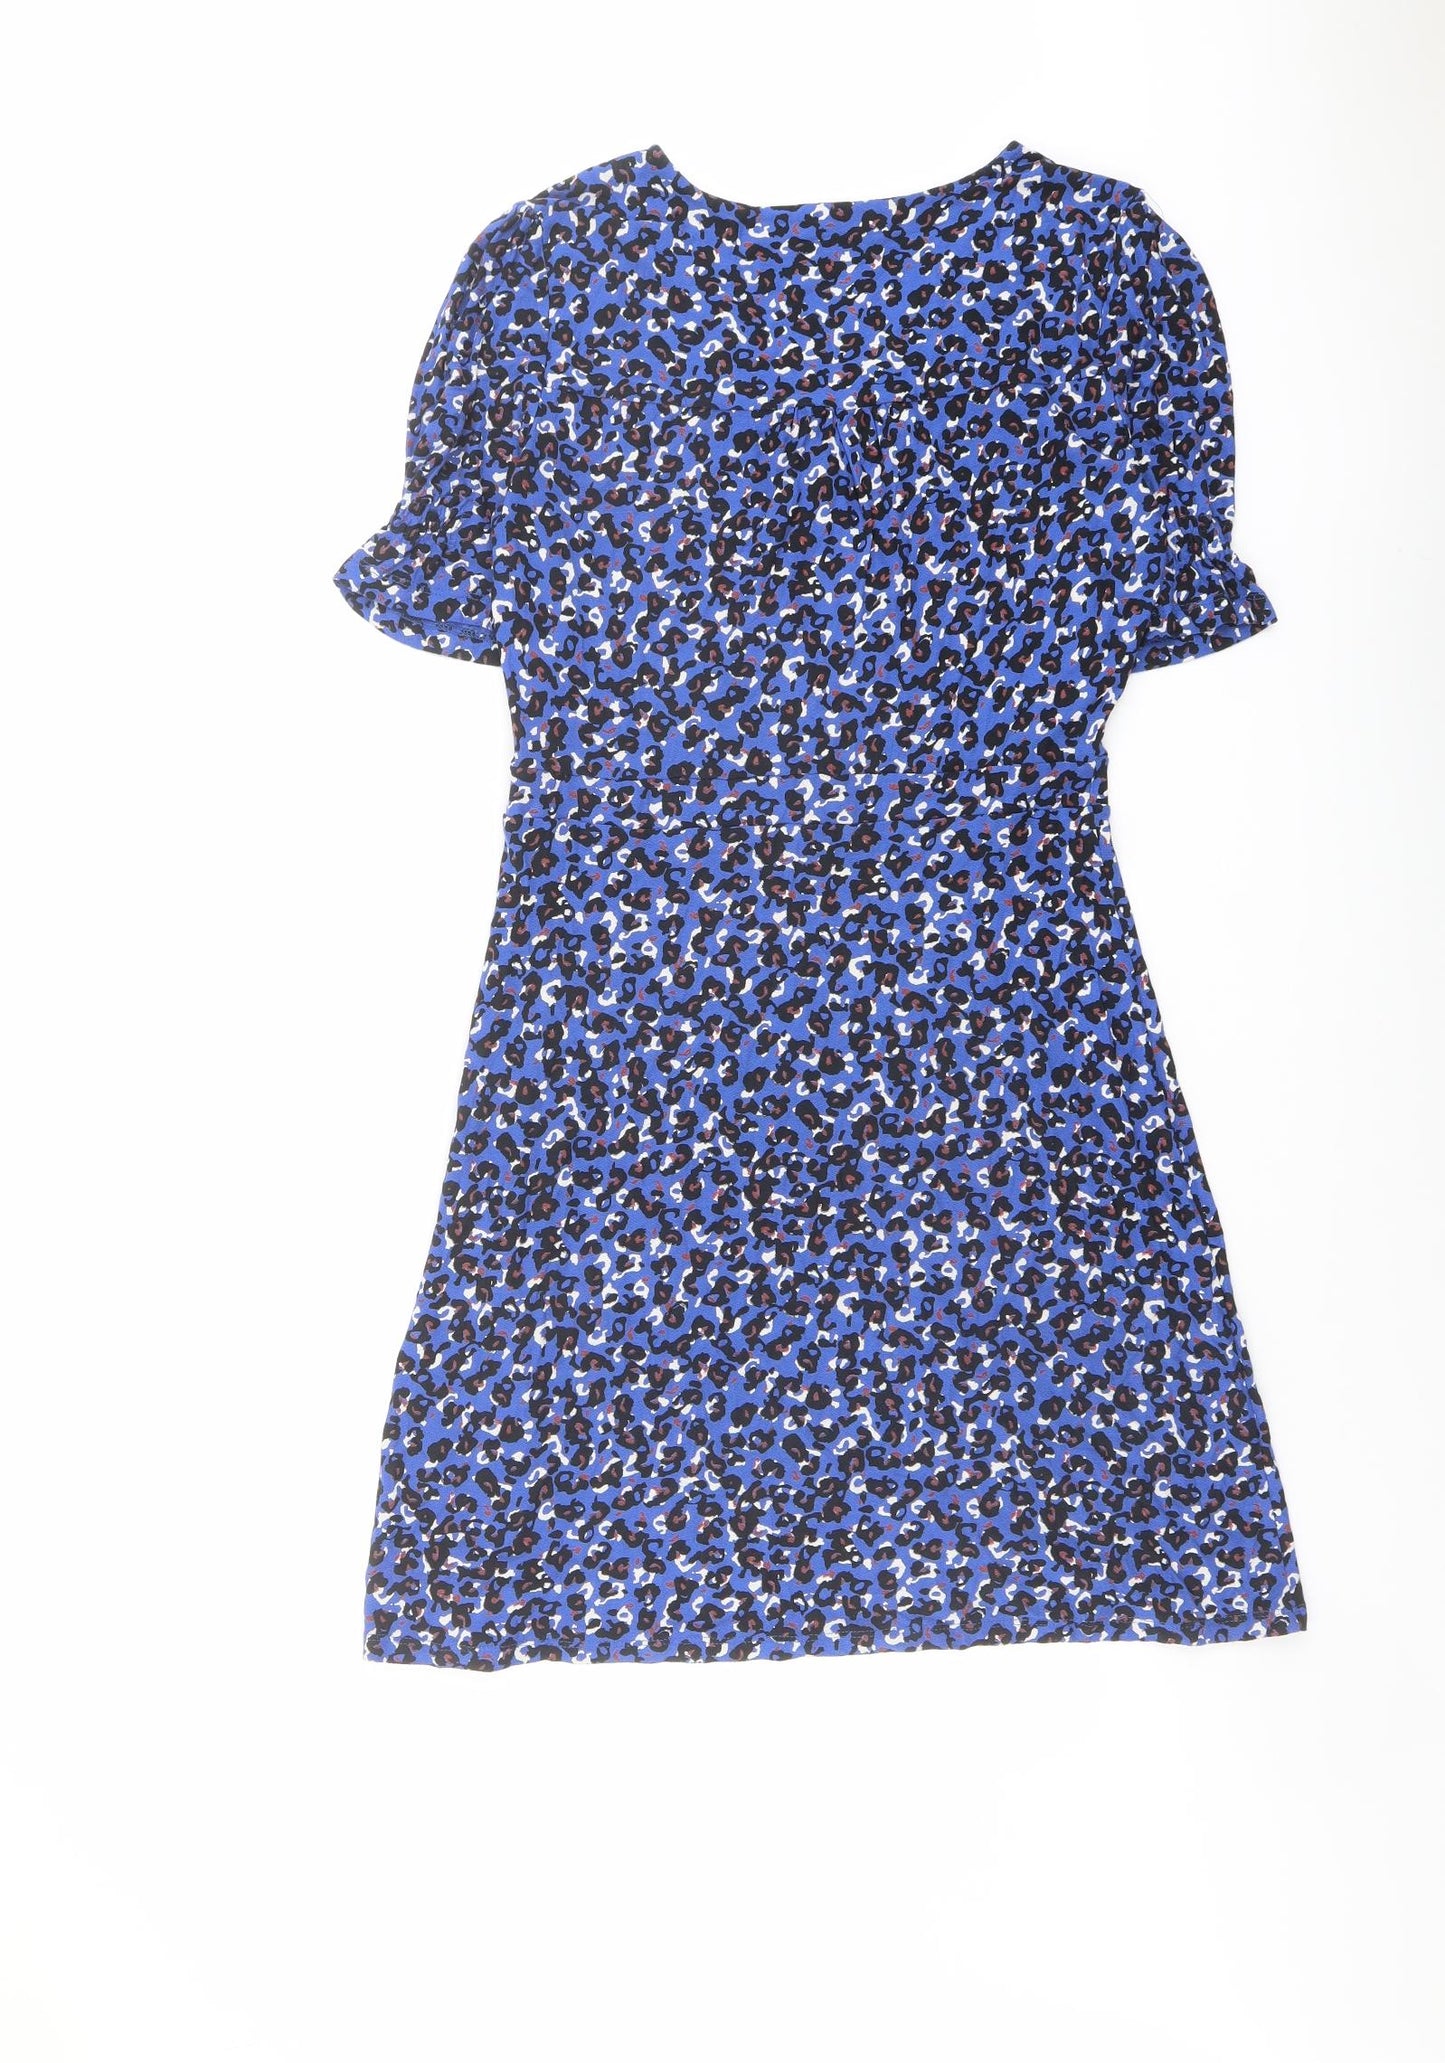 NEXT Womens Blue Animal Print Viscose Shift Size 10 V-Neck Pullover - Leopard pattern